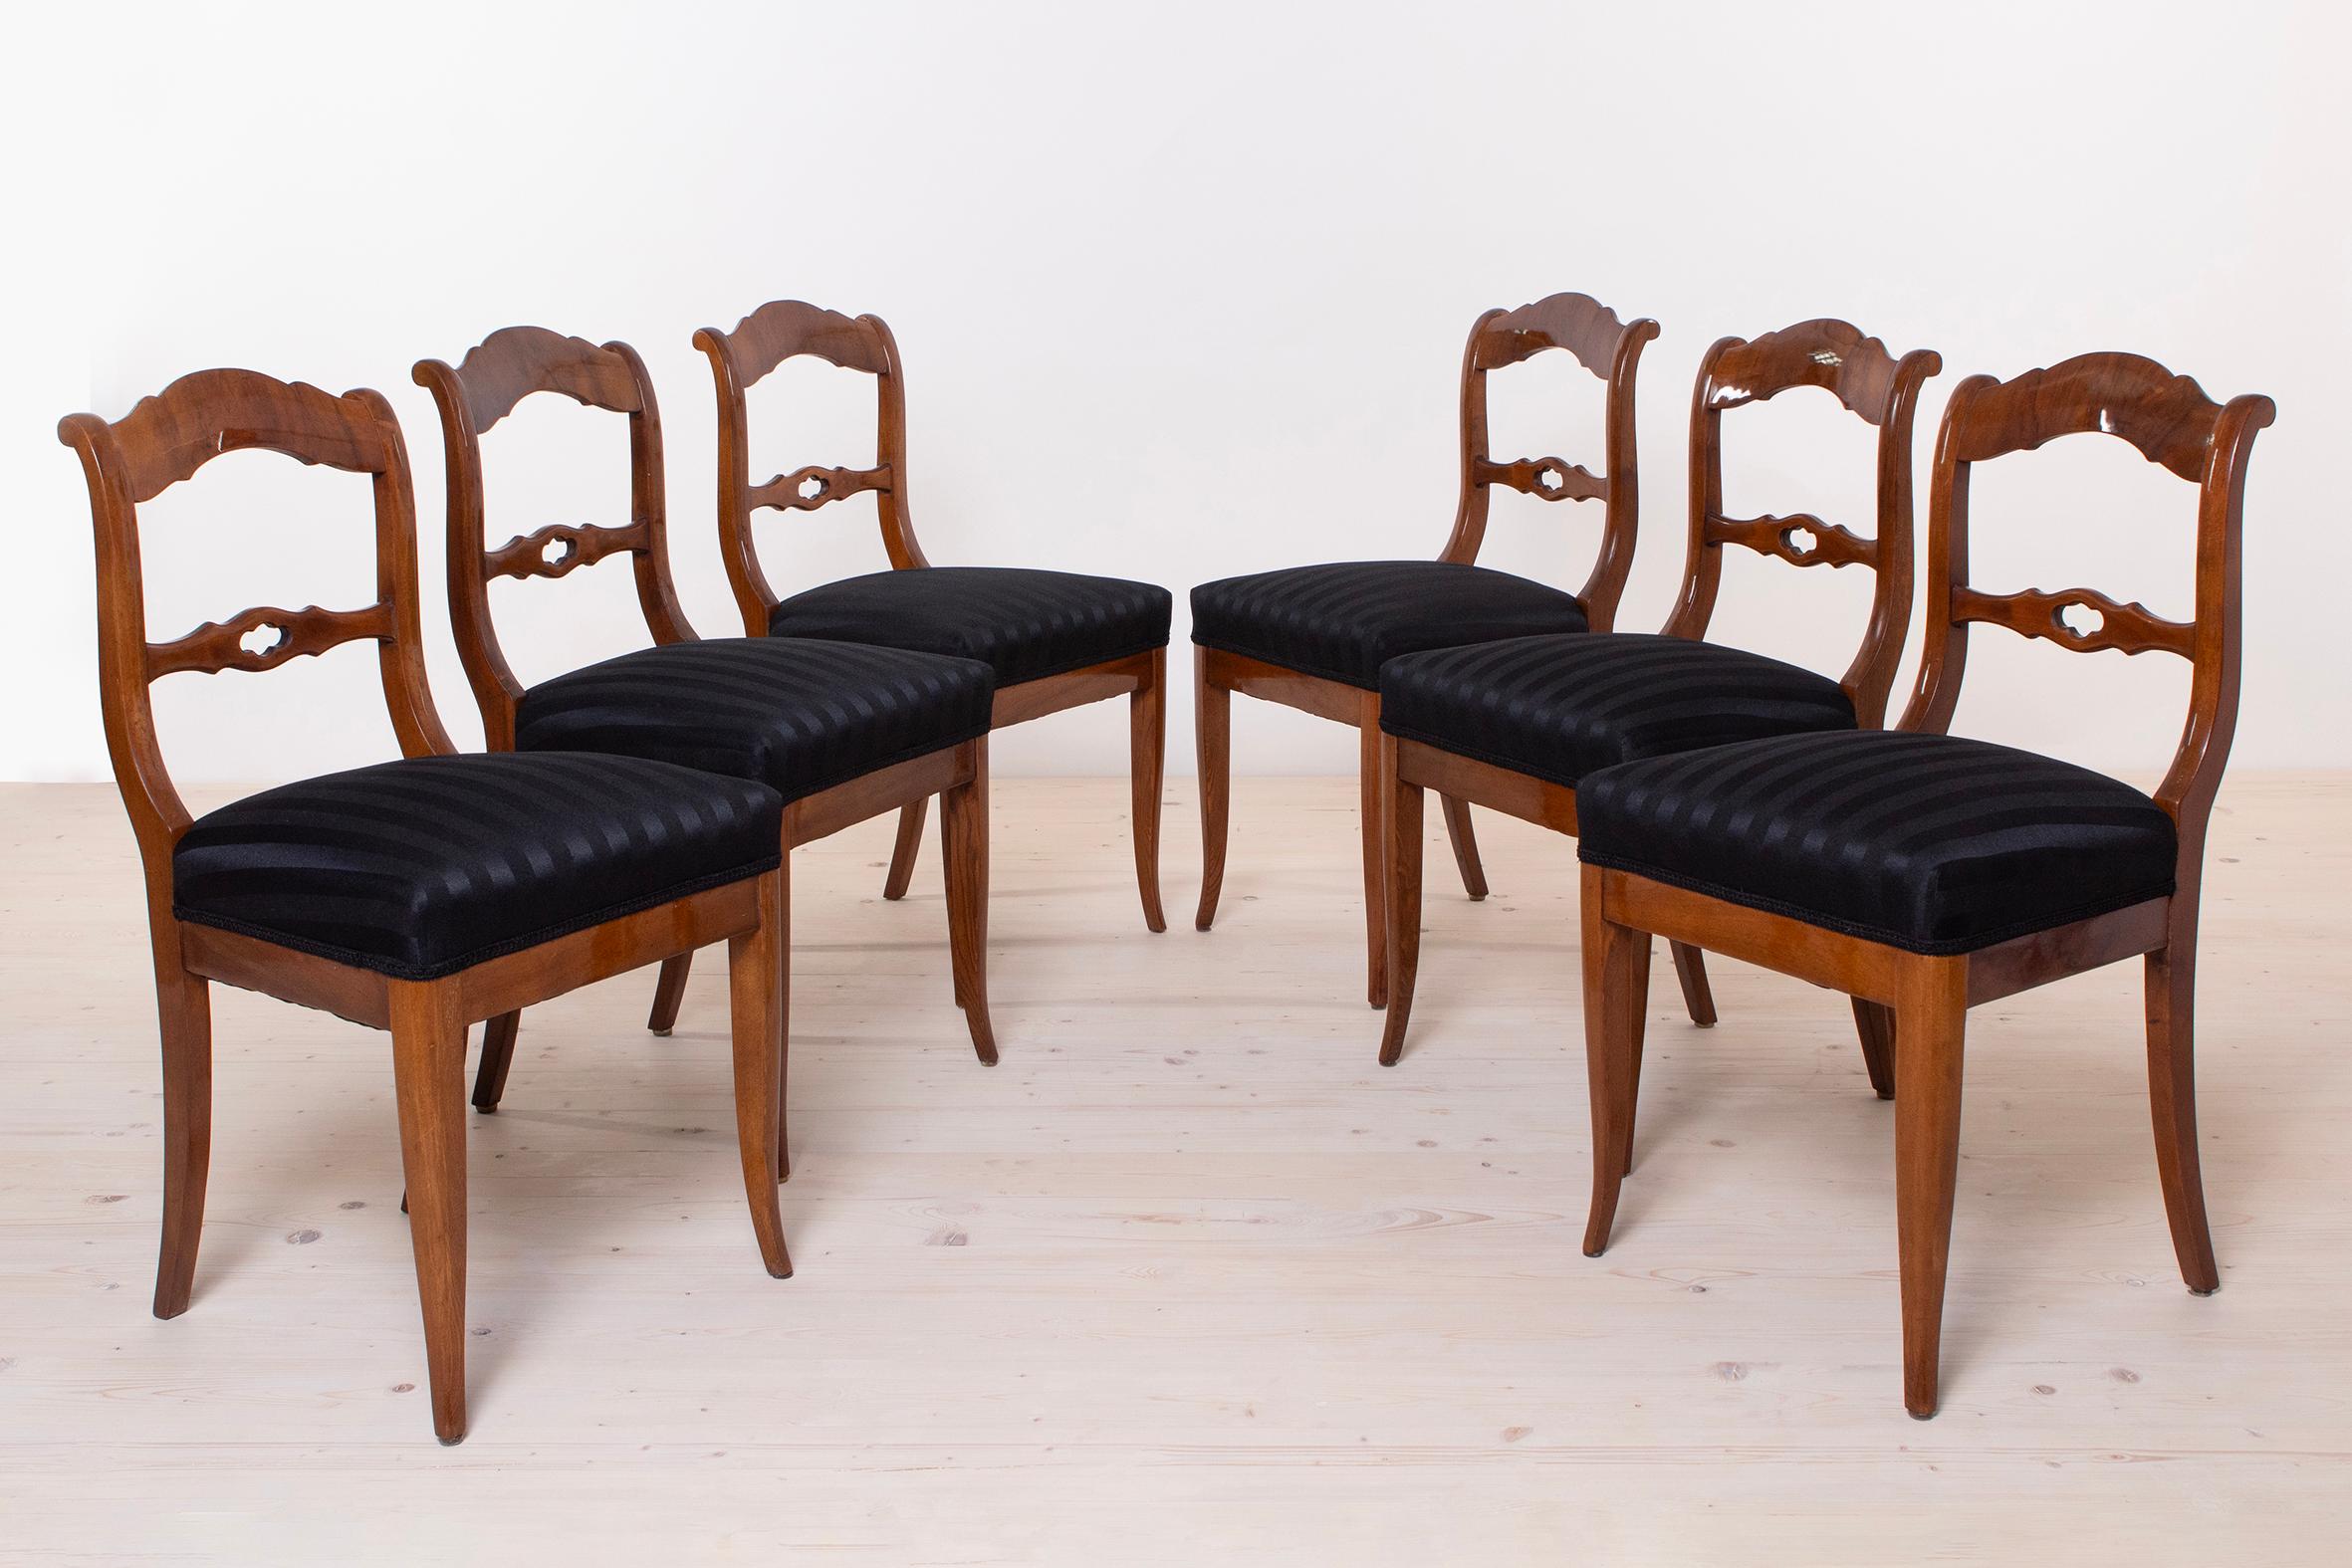 Polished Set of 6 Biedermeier Elegant Black Chairs, Germany, 19th Century, Fully Restored For Sale